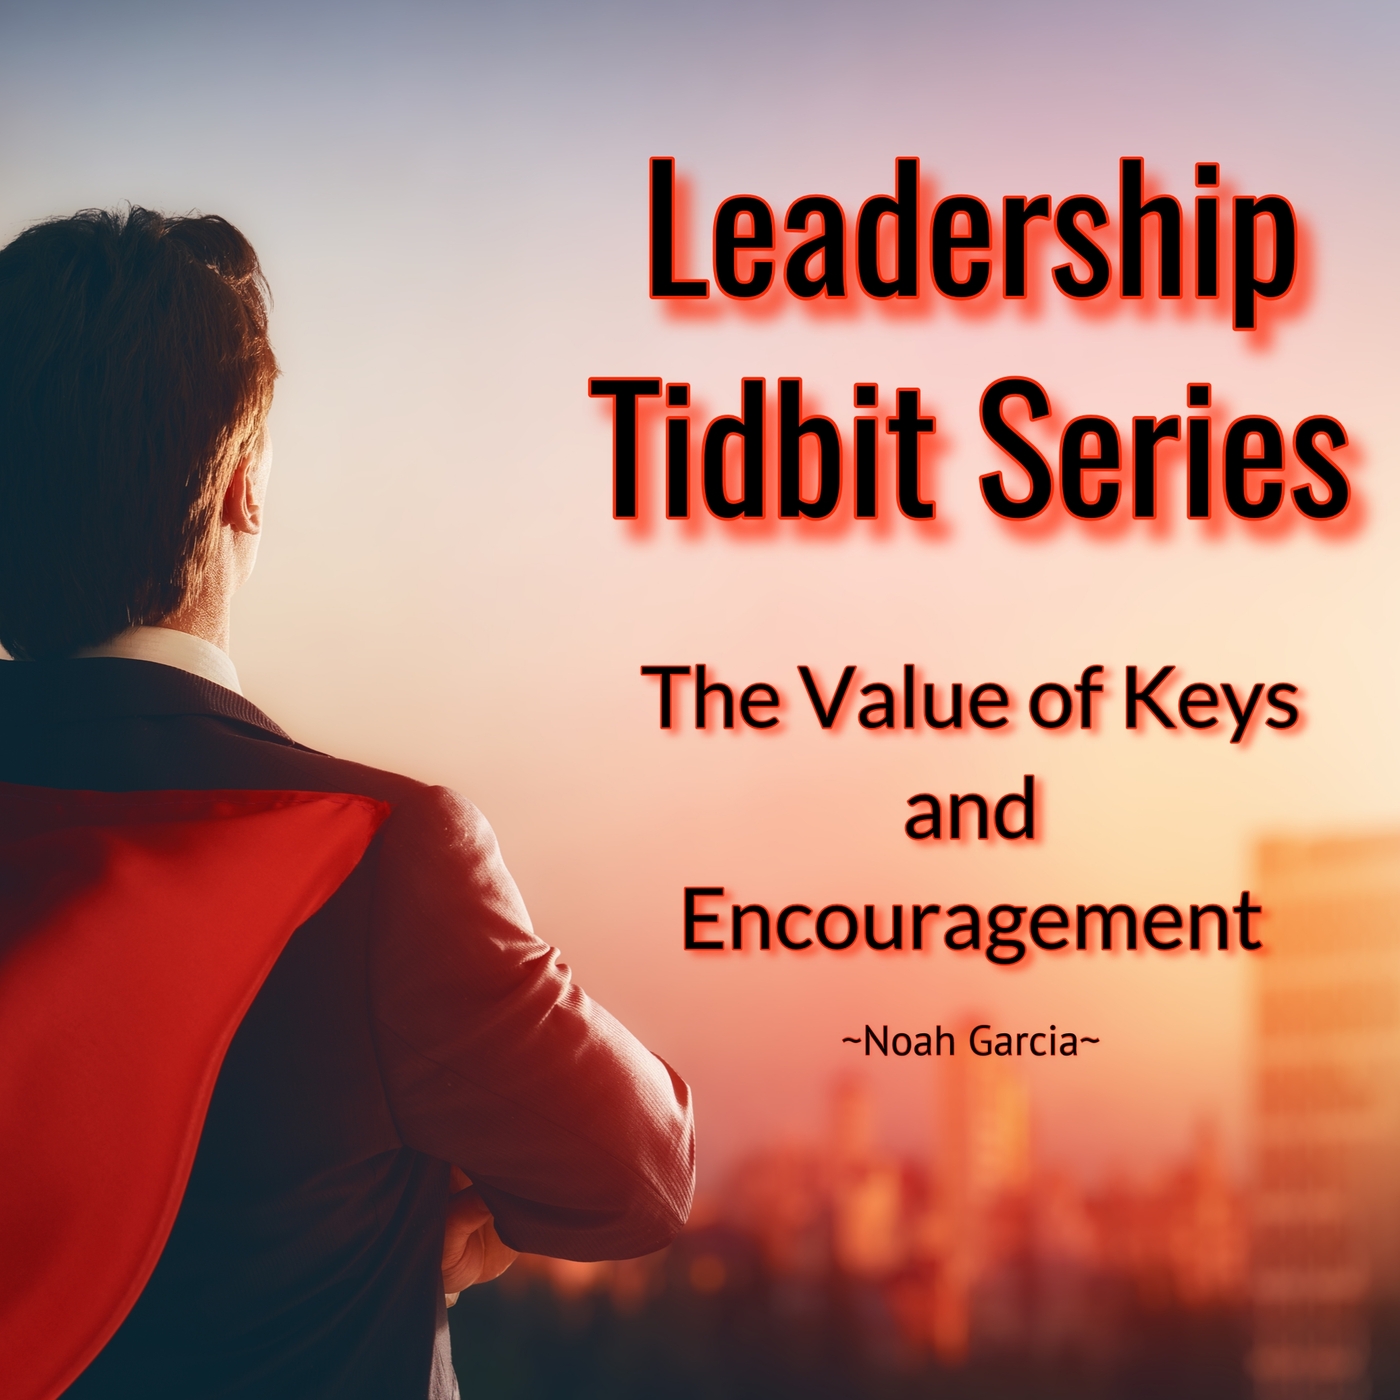 Leadership Tidbit Series: The Value of Keys and Encouragement